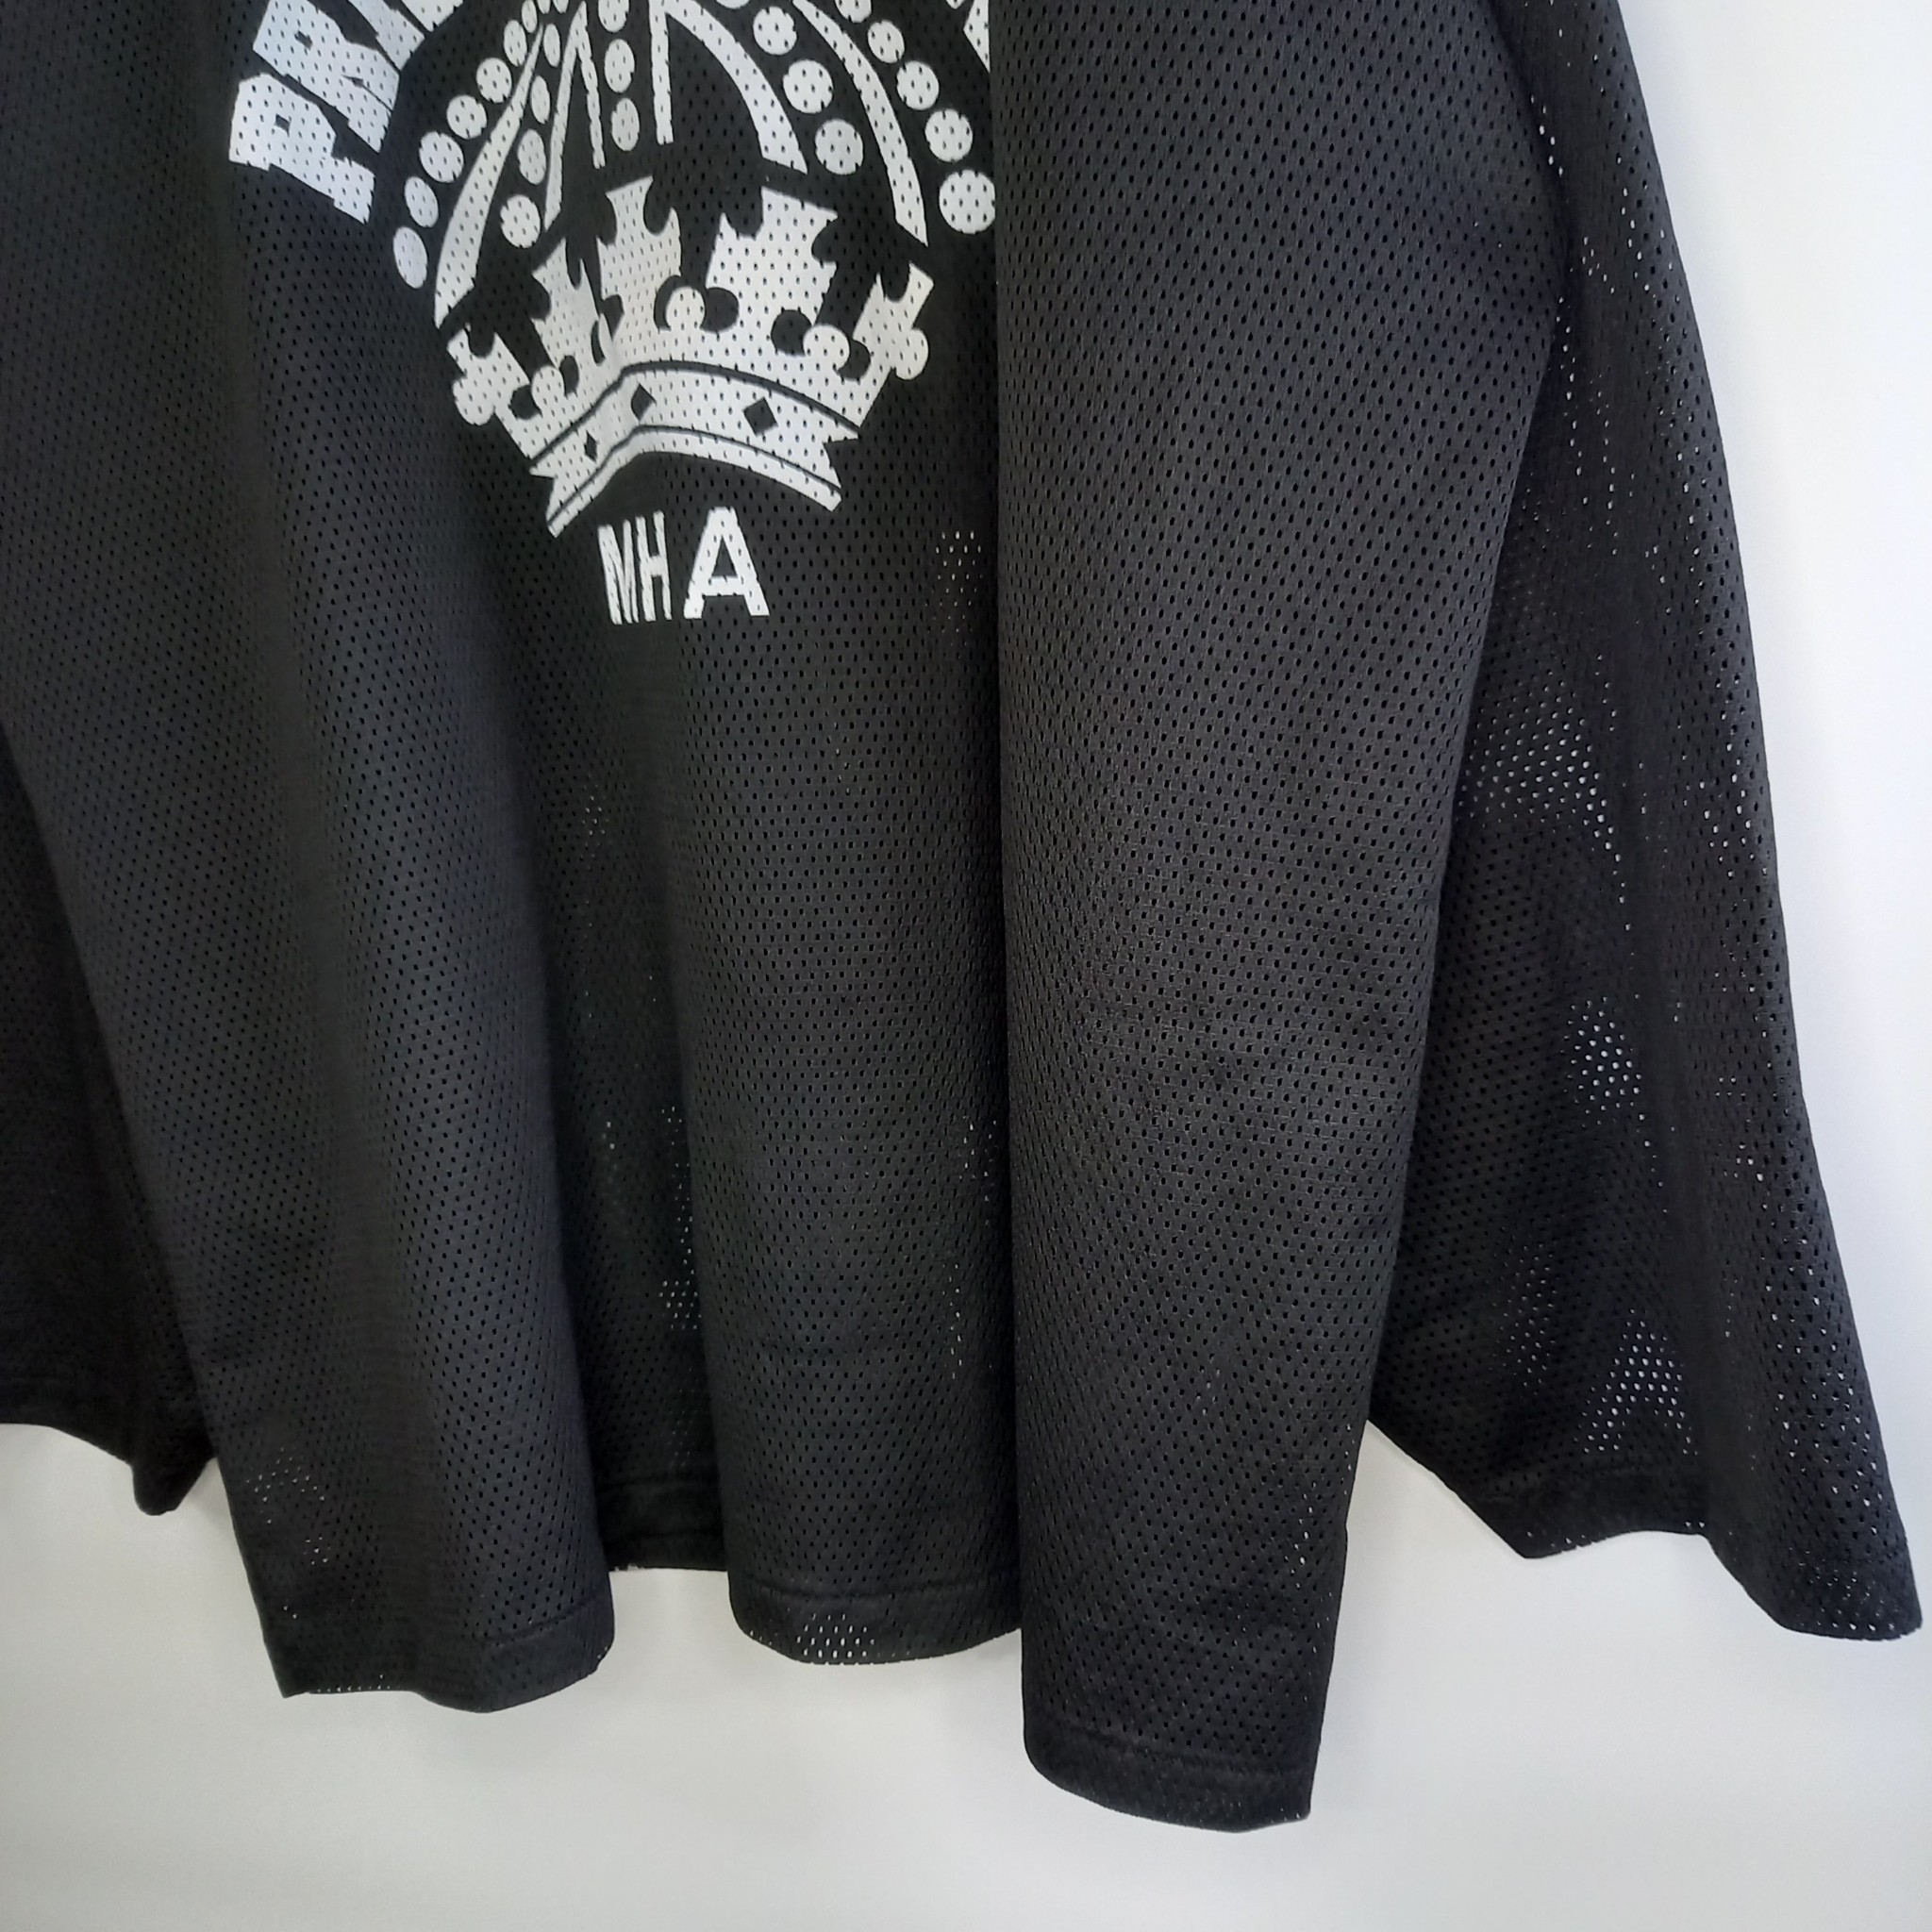 Athletic Knit Vネック ゲームシャツ フットボールシャツ カナダ製 メンズXL /eaa338256